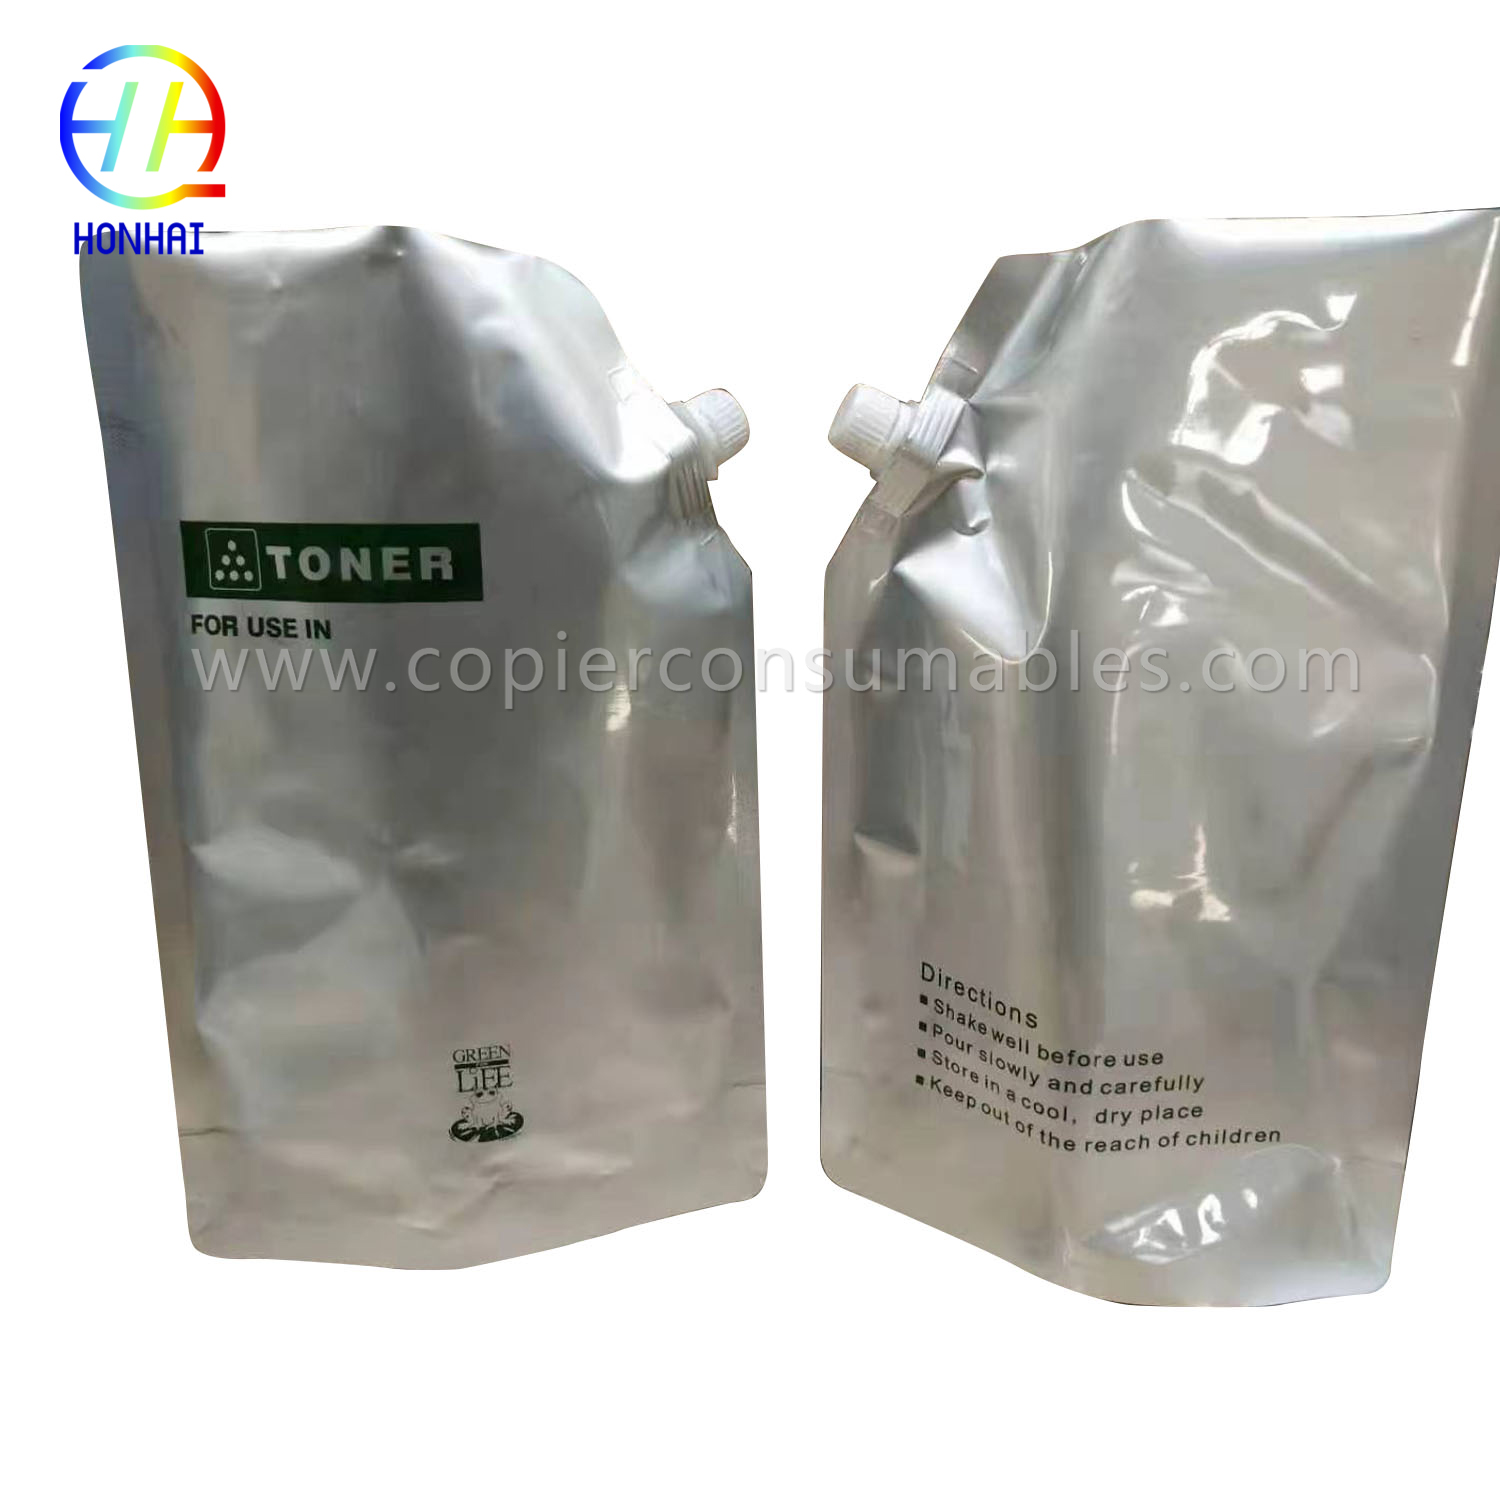 Toner Powder for HP PRO M402 426 CF226 拷贝